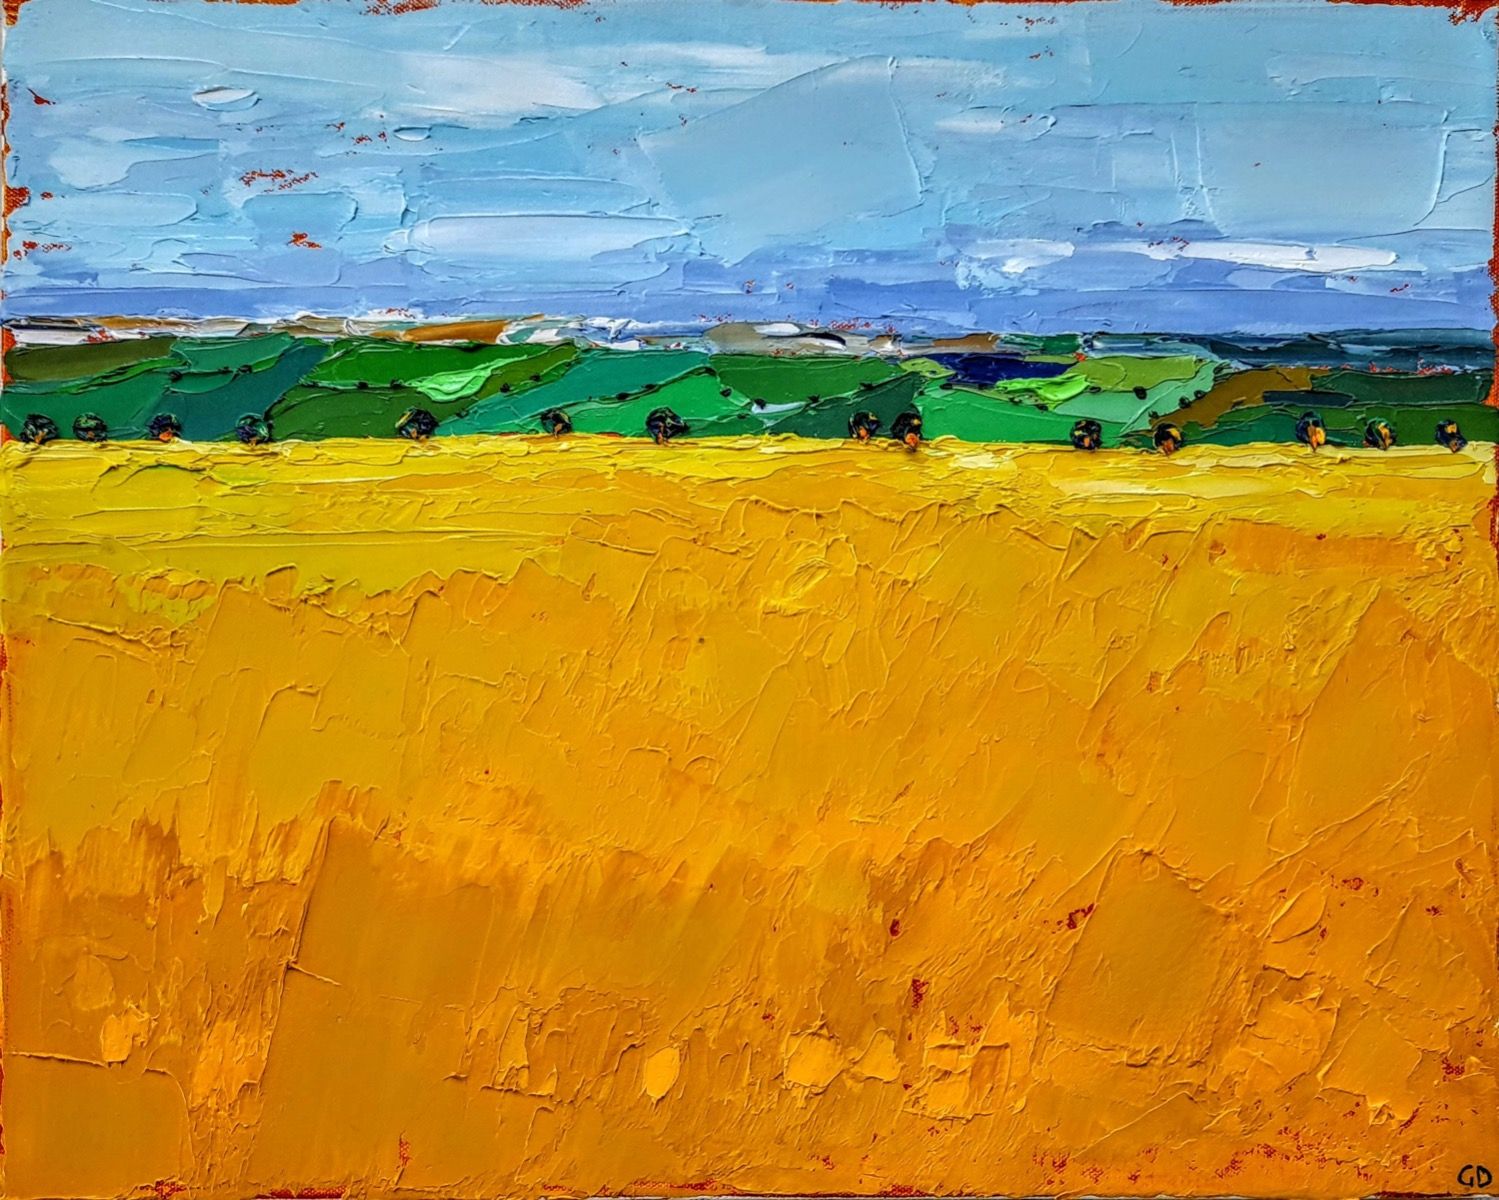 Cotswold Barley Field by Georgie Dowling